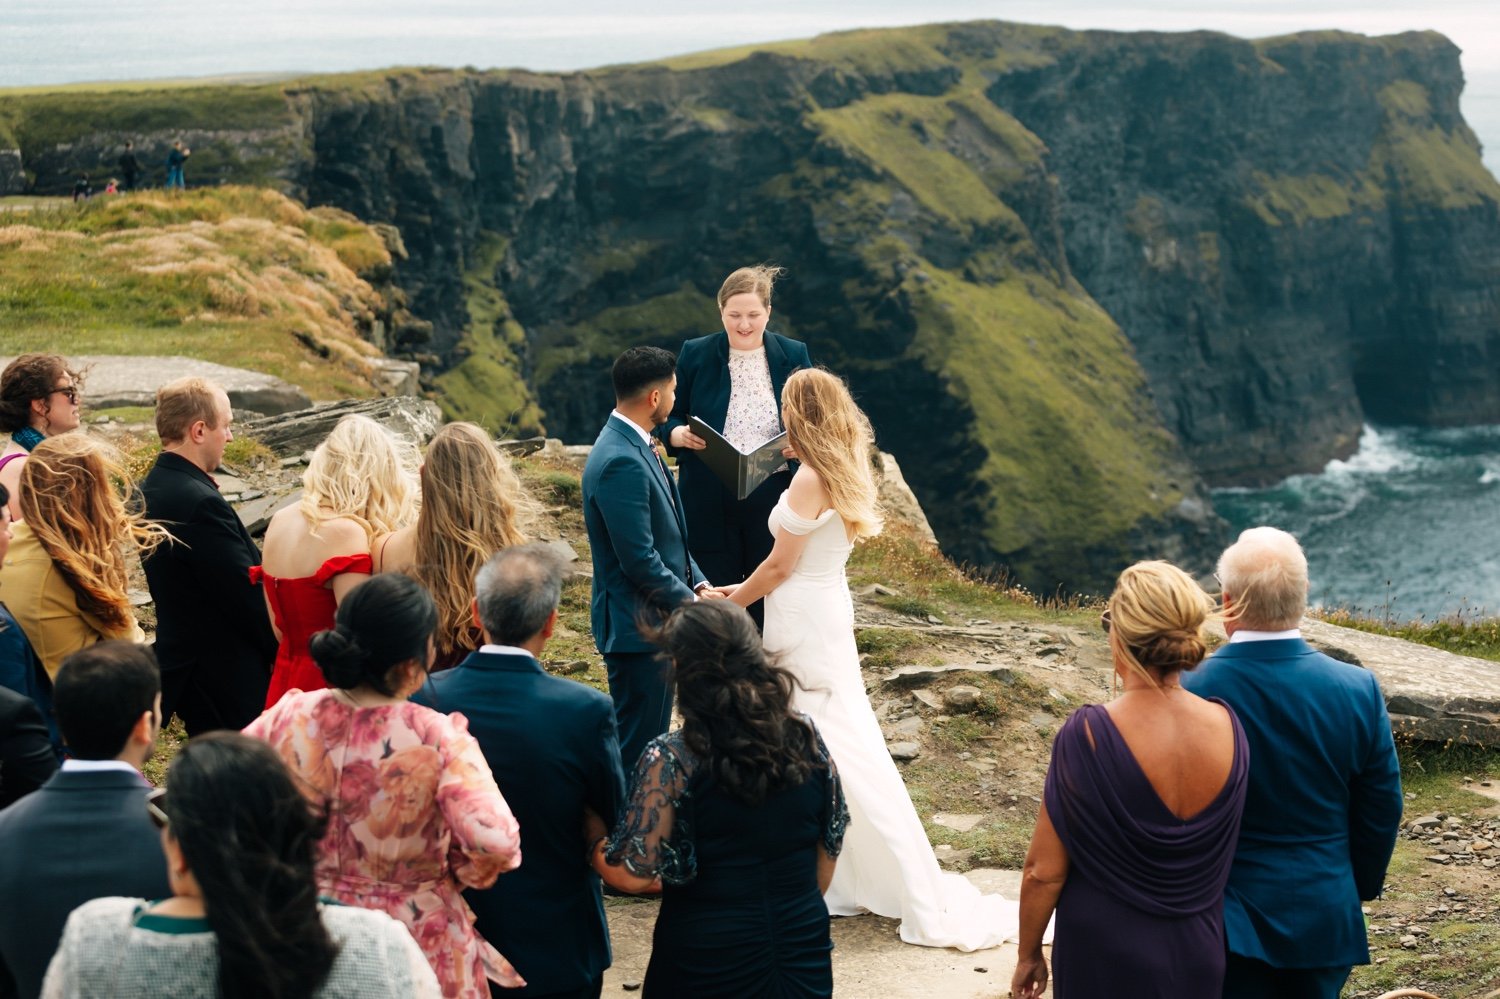 44_Ireland-cliff-elopement-wedding-photographer-kmp-photography-2283.jpg